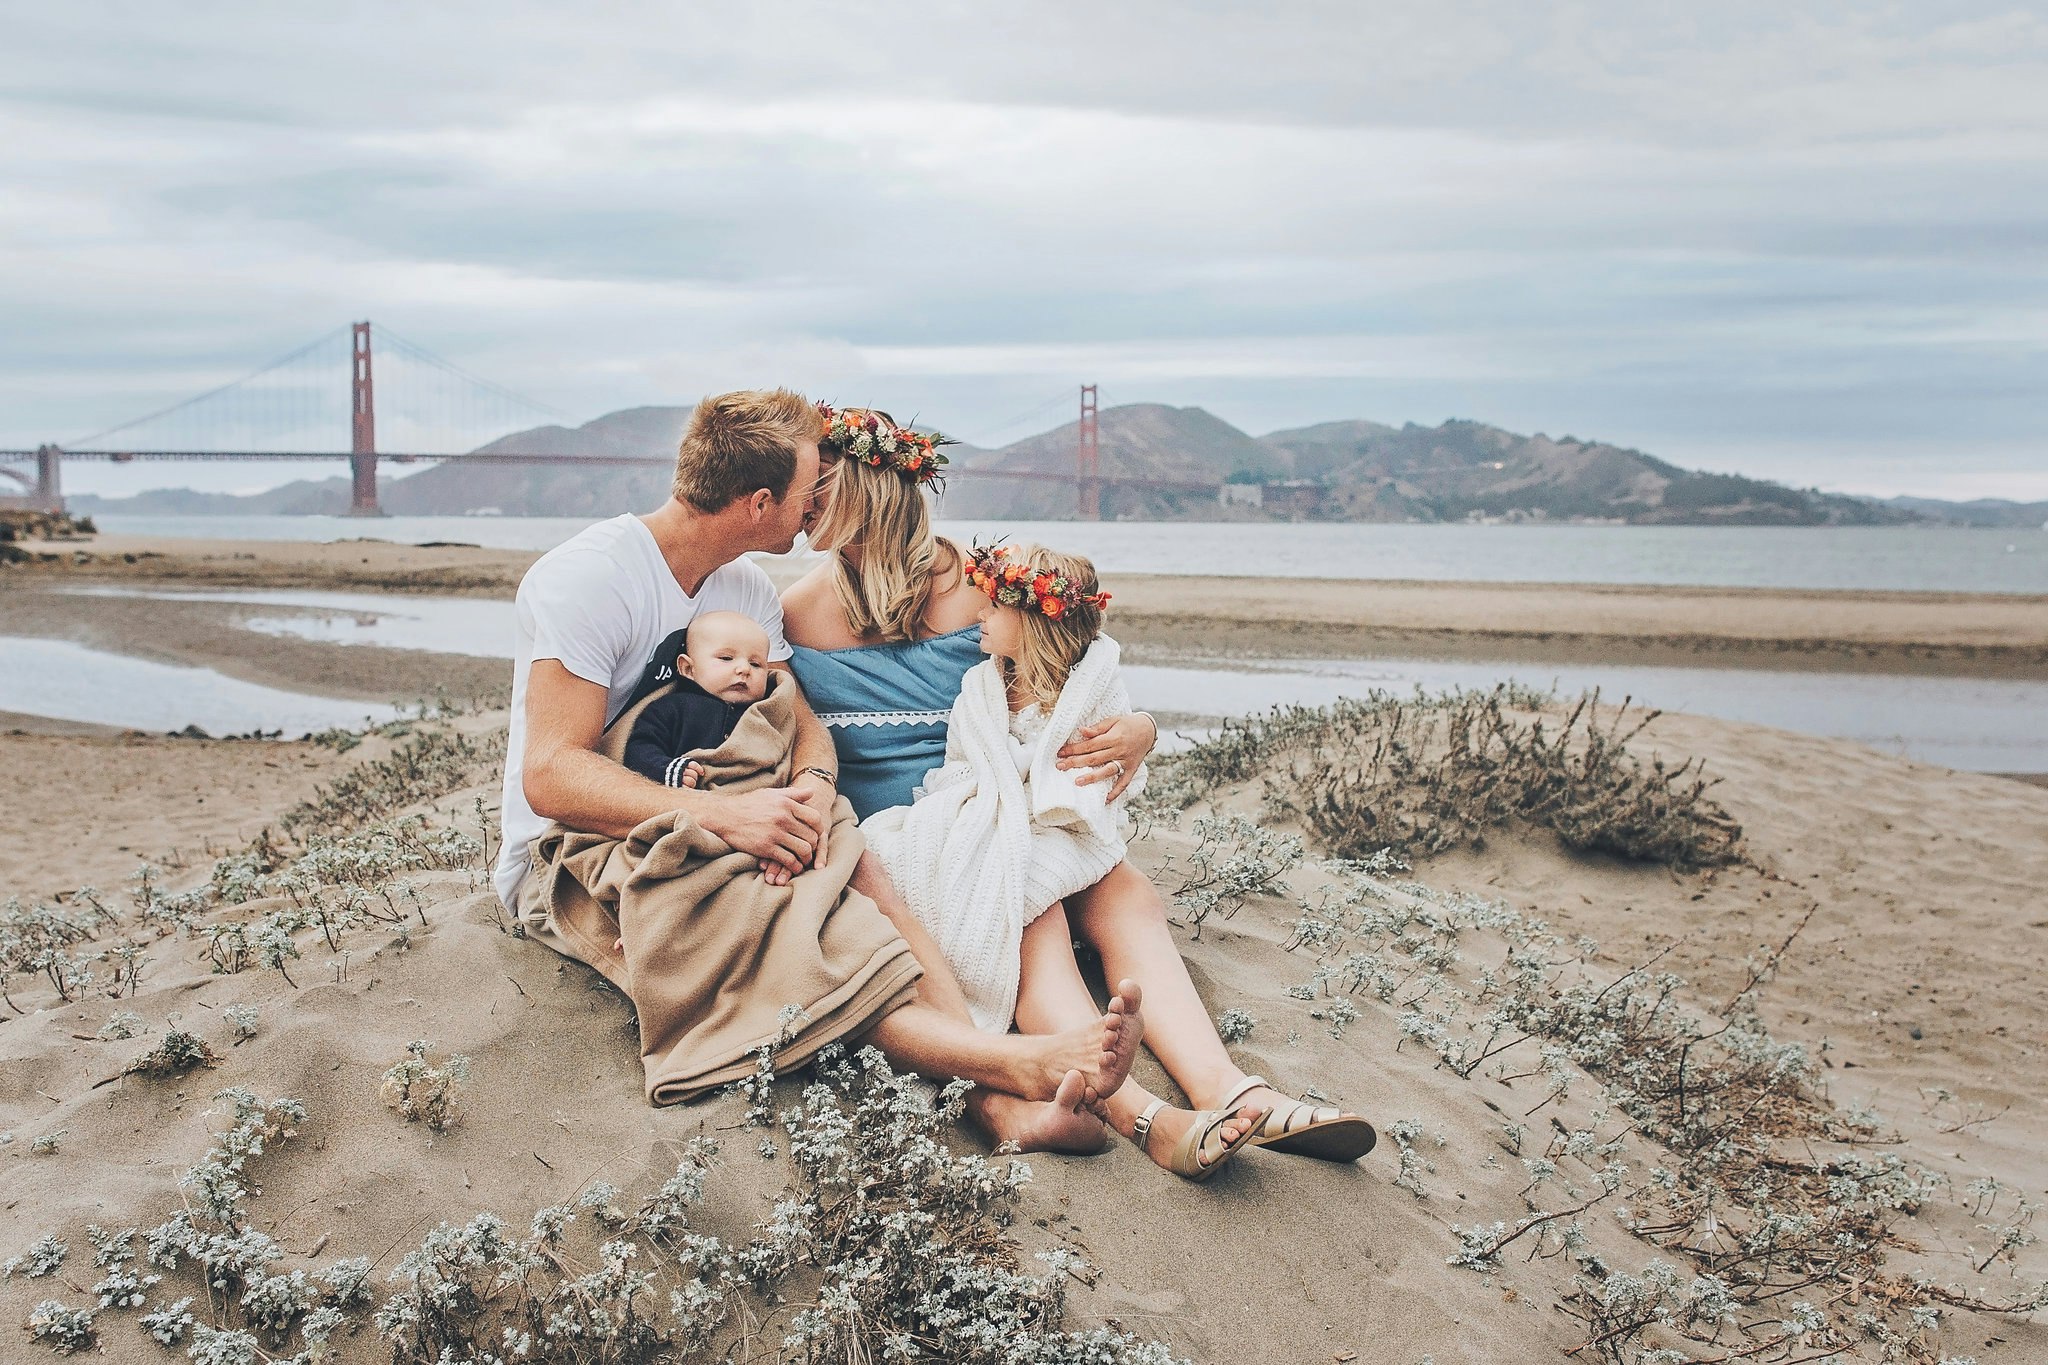 A family portrait taken in San Francisco.